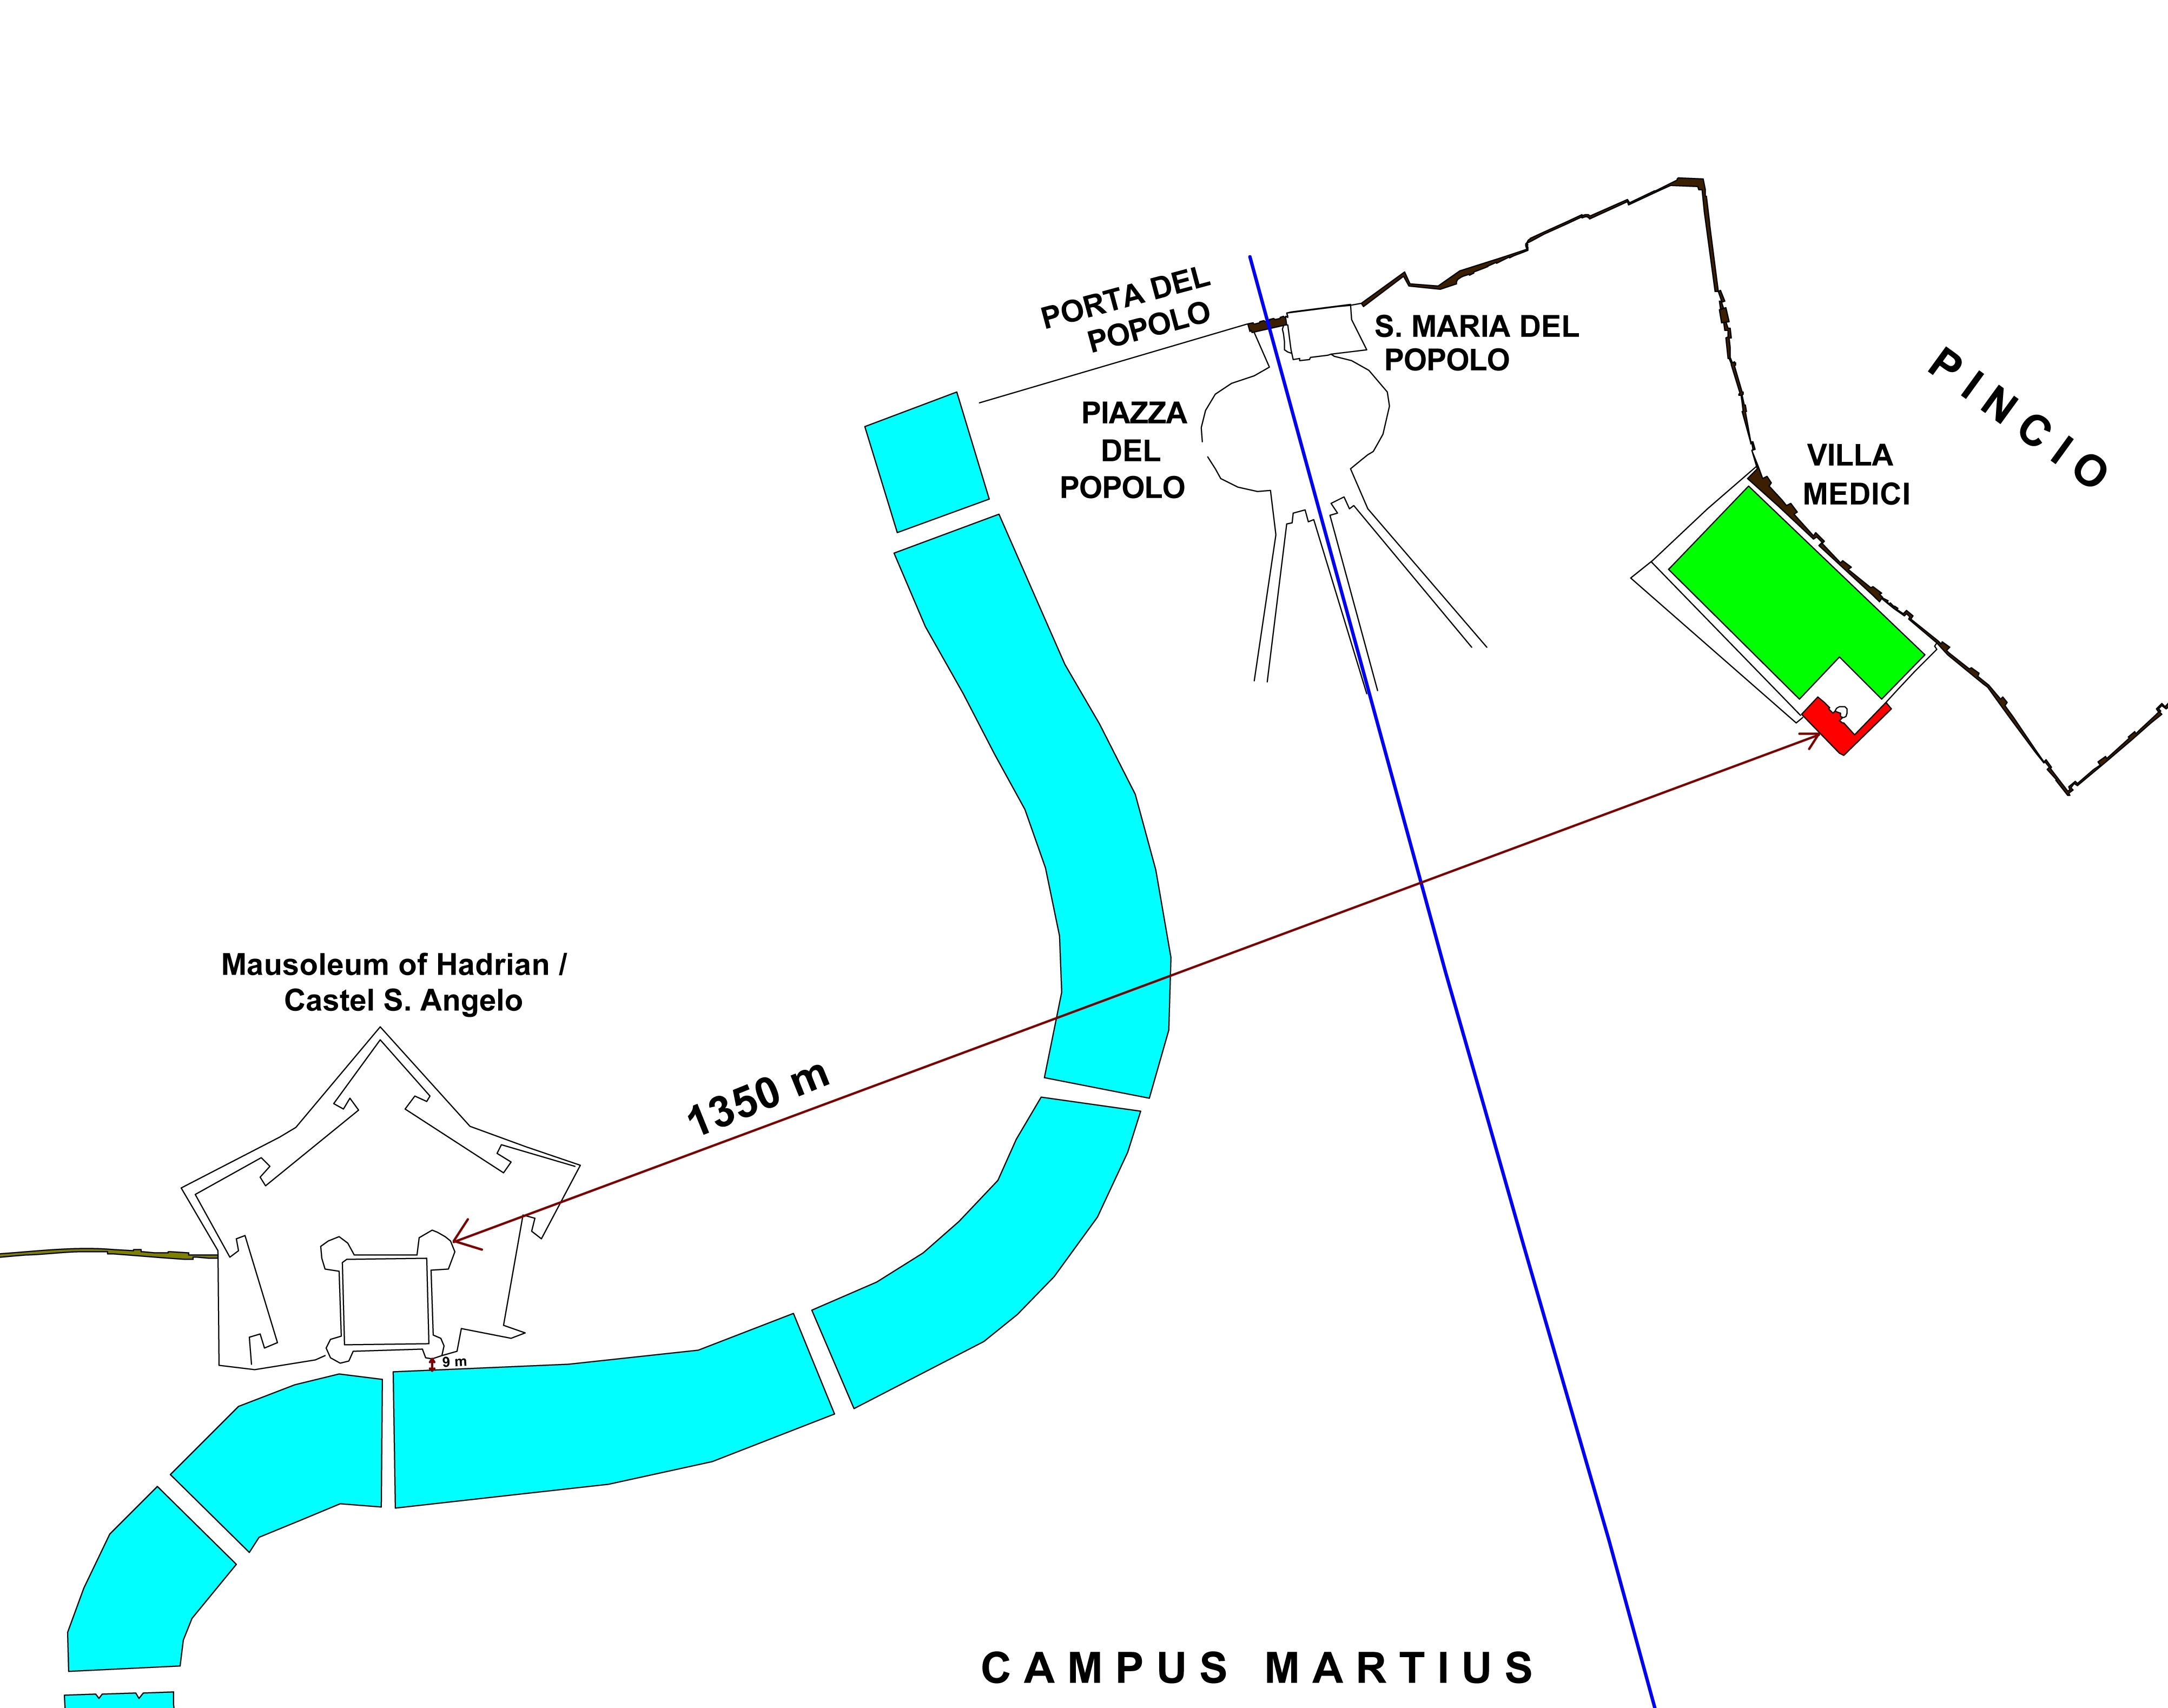 Fig. 8. Map showing Castel S. Angelo, Porta del Popolo, S. Maria del Popolo, Piazza del Popolo and Villa Medici. C. Häuber, AIS ROMA aus Chrystina Häuber 2014